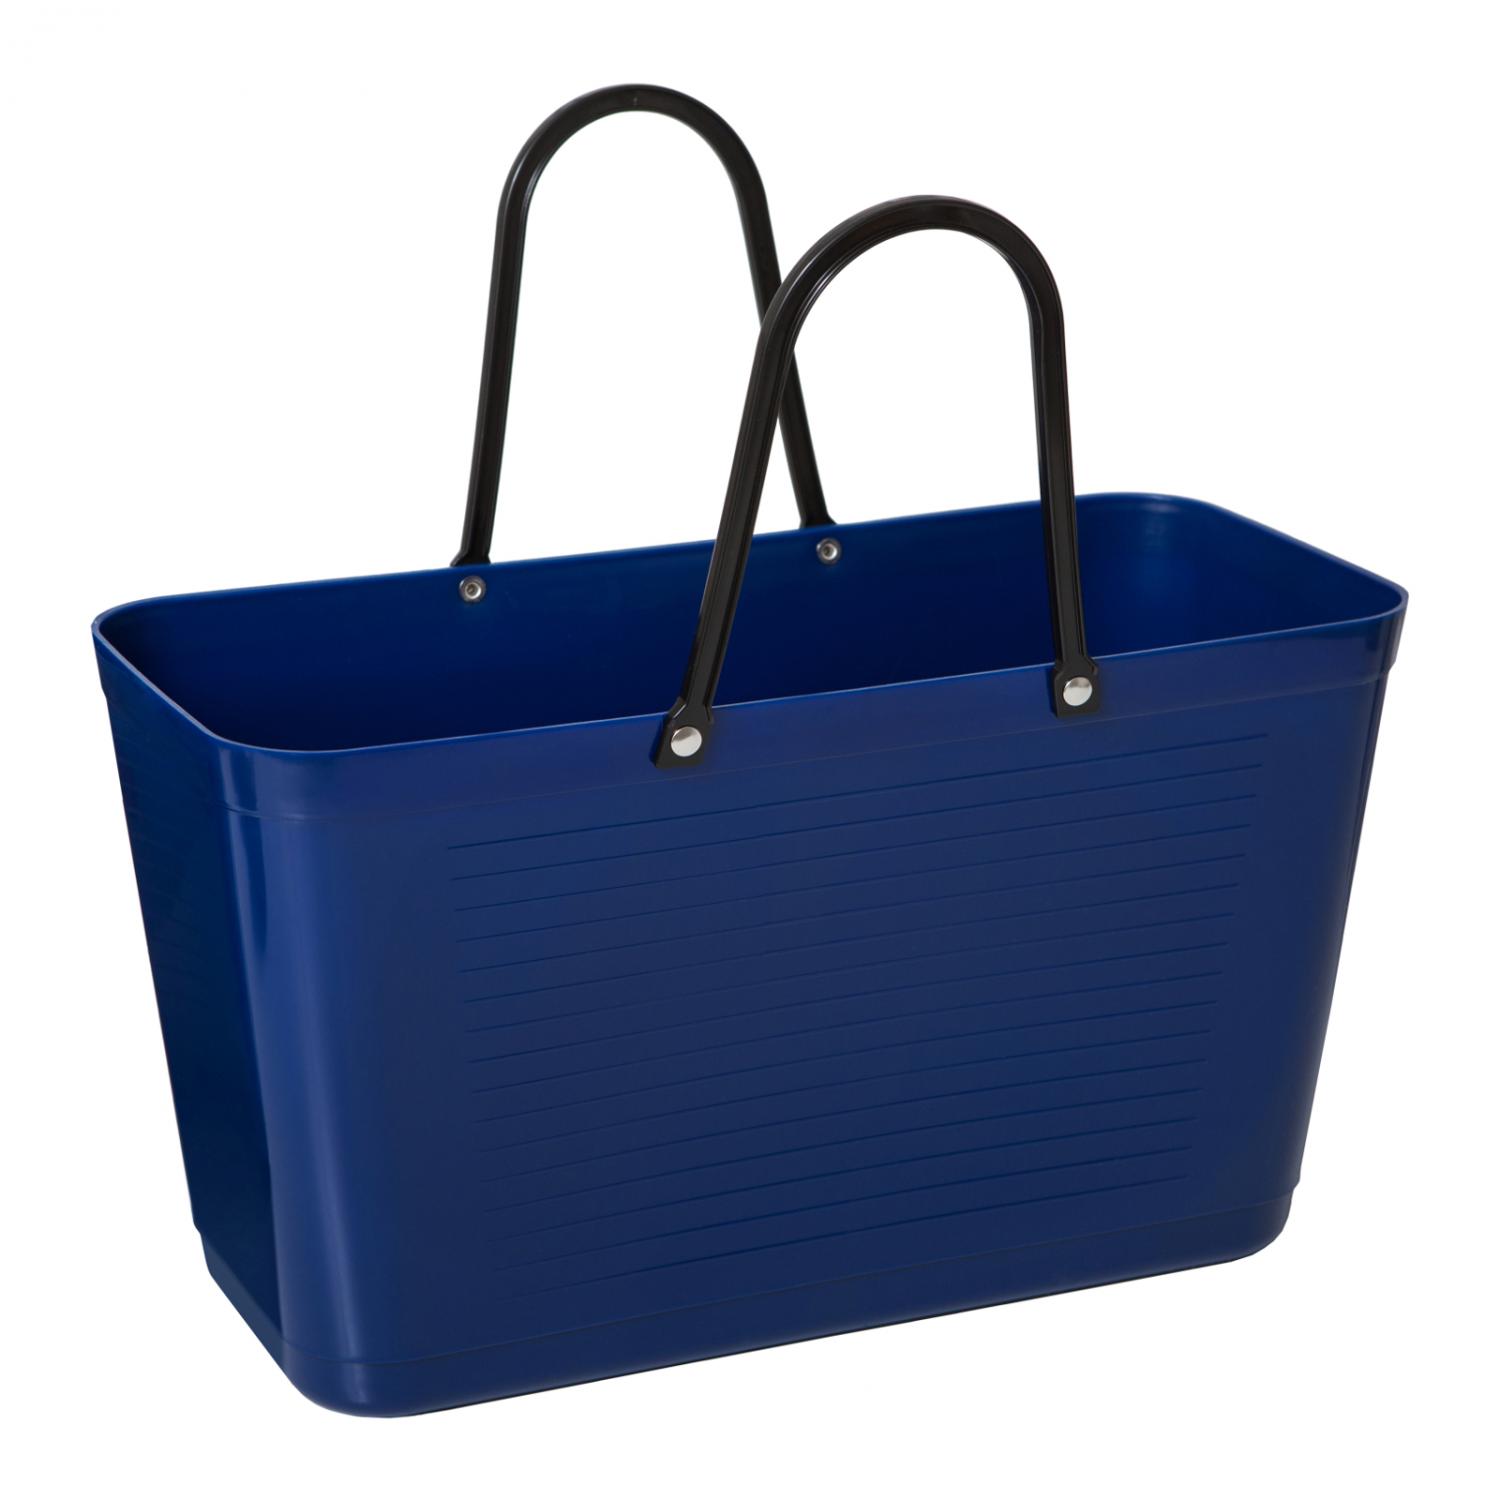 Blue plastic tote bag from Hinza - shopping bag, beach bag.